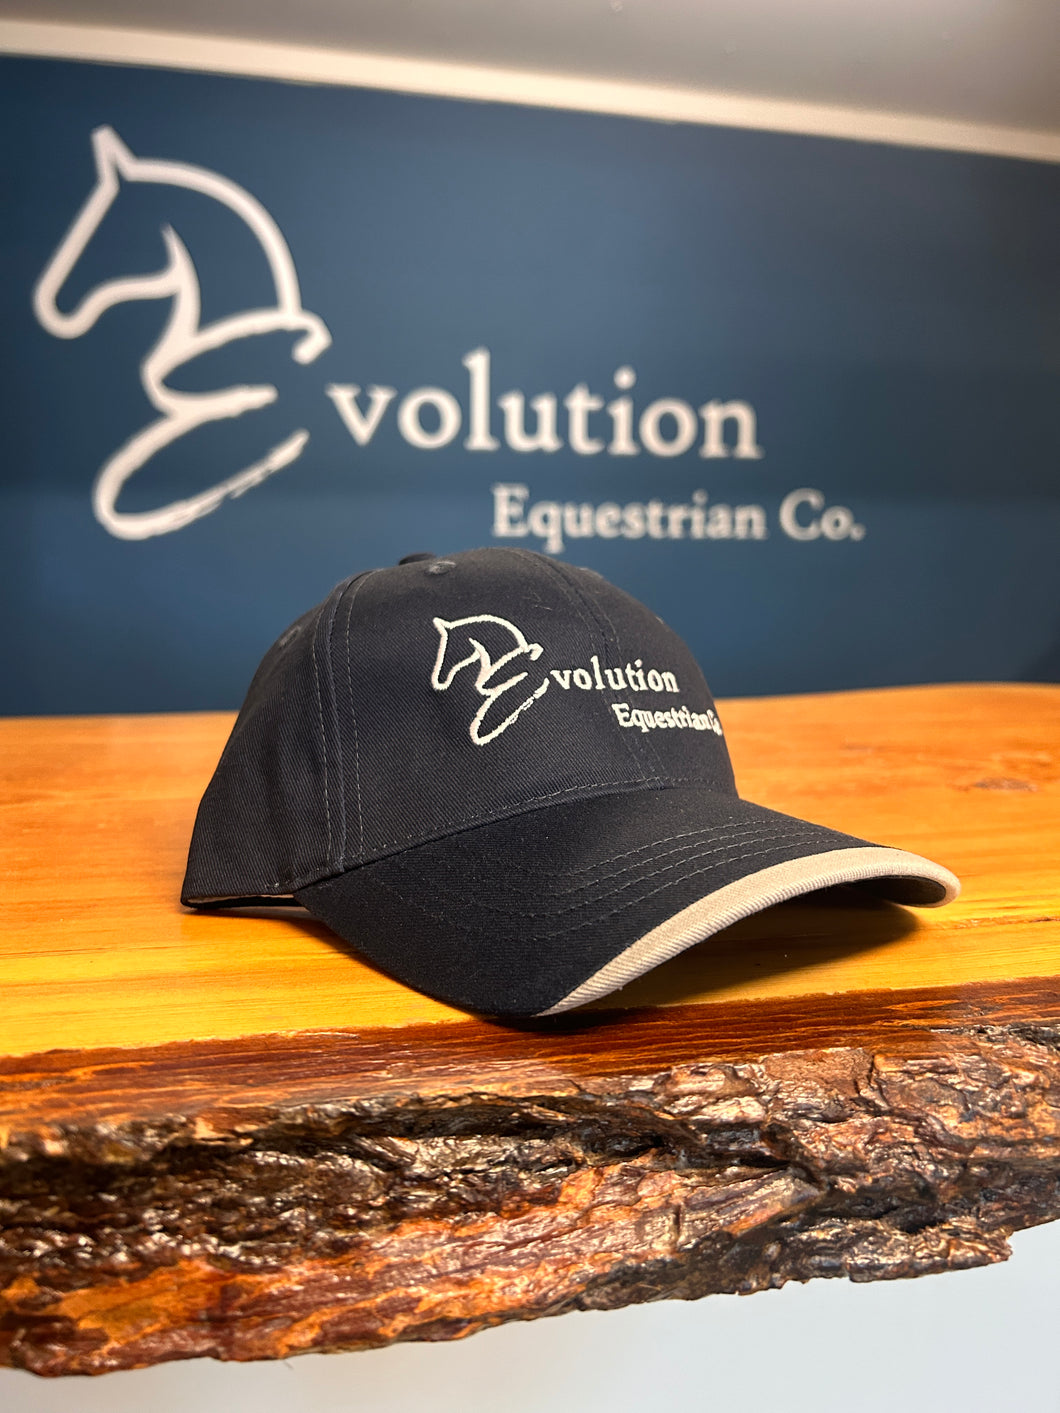 Evolution Equestrian Co. Caps